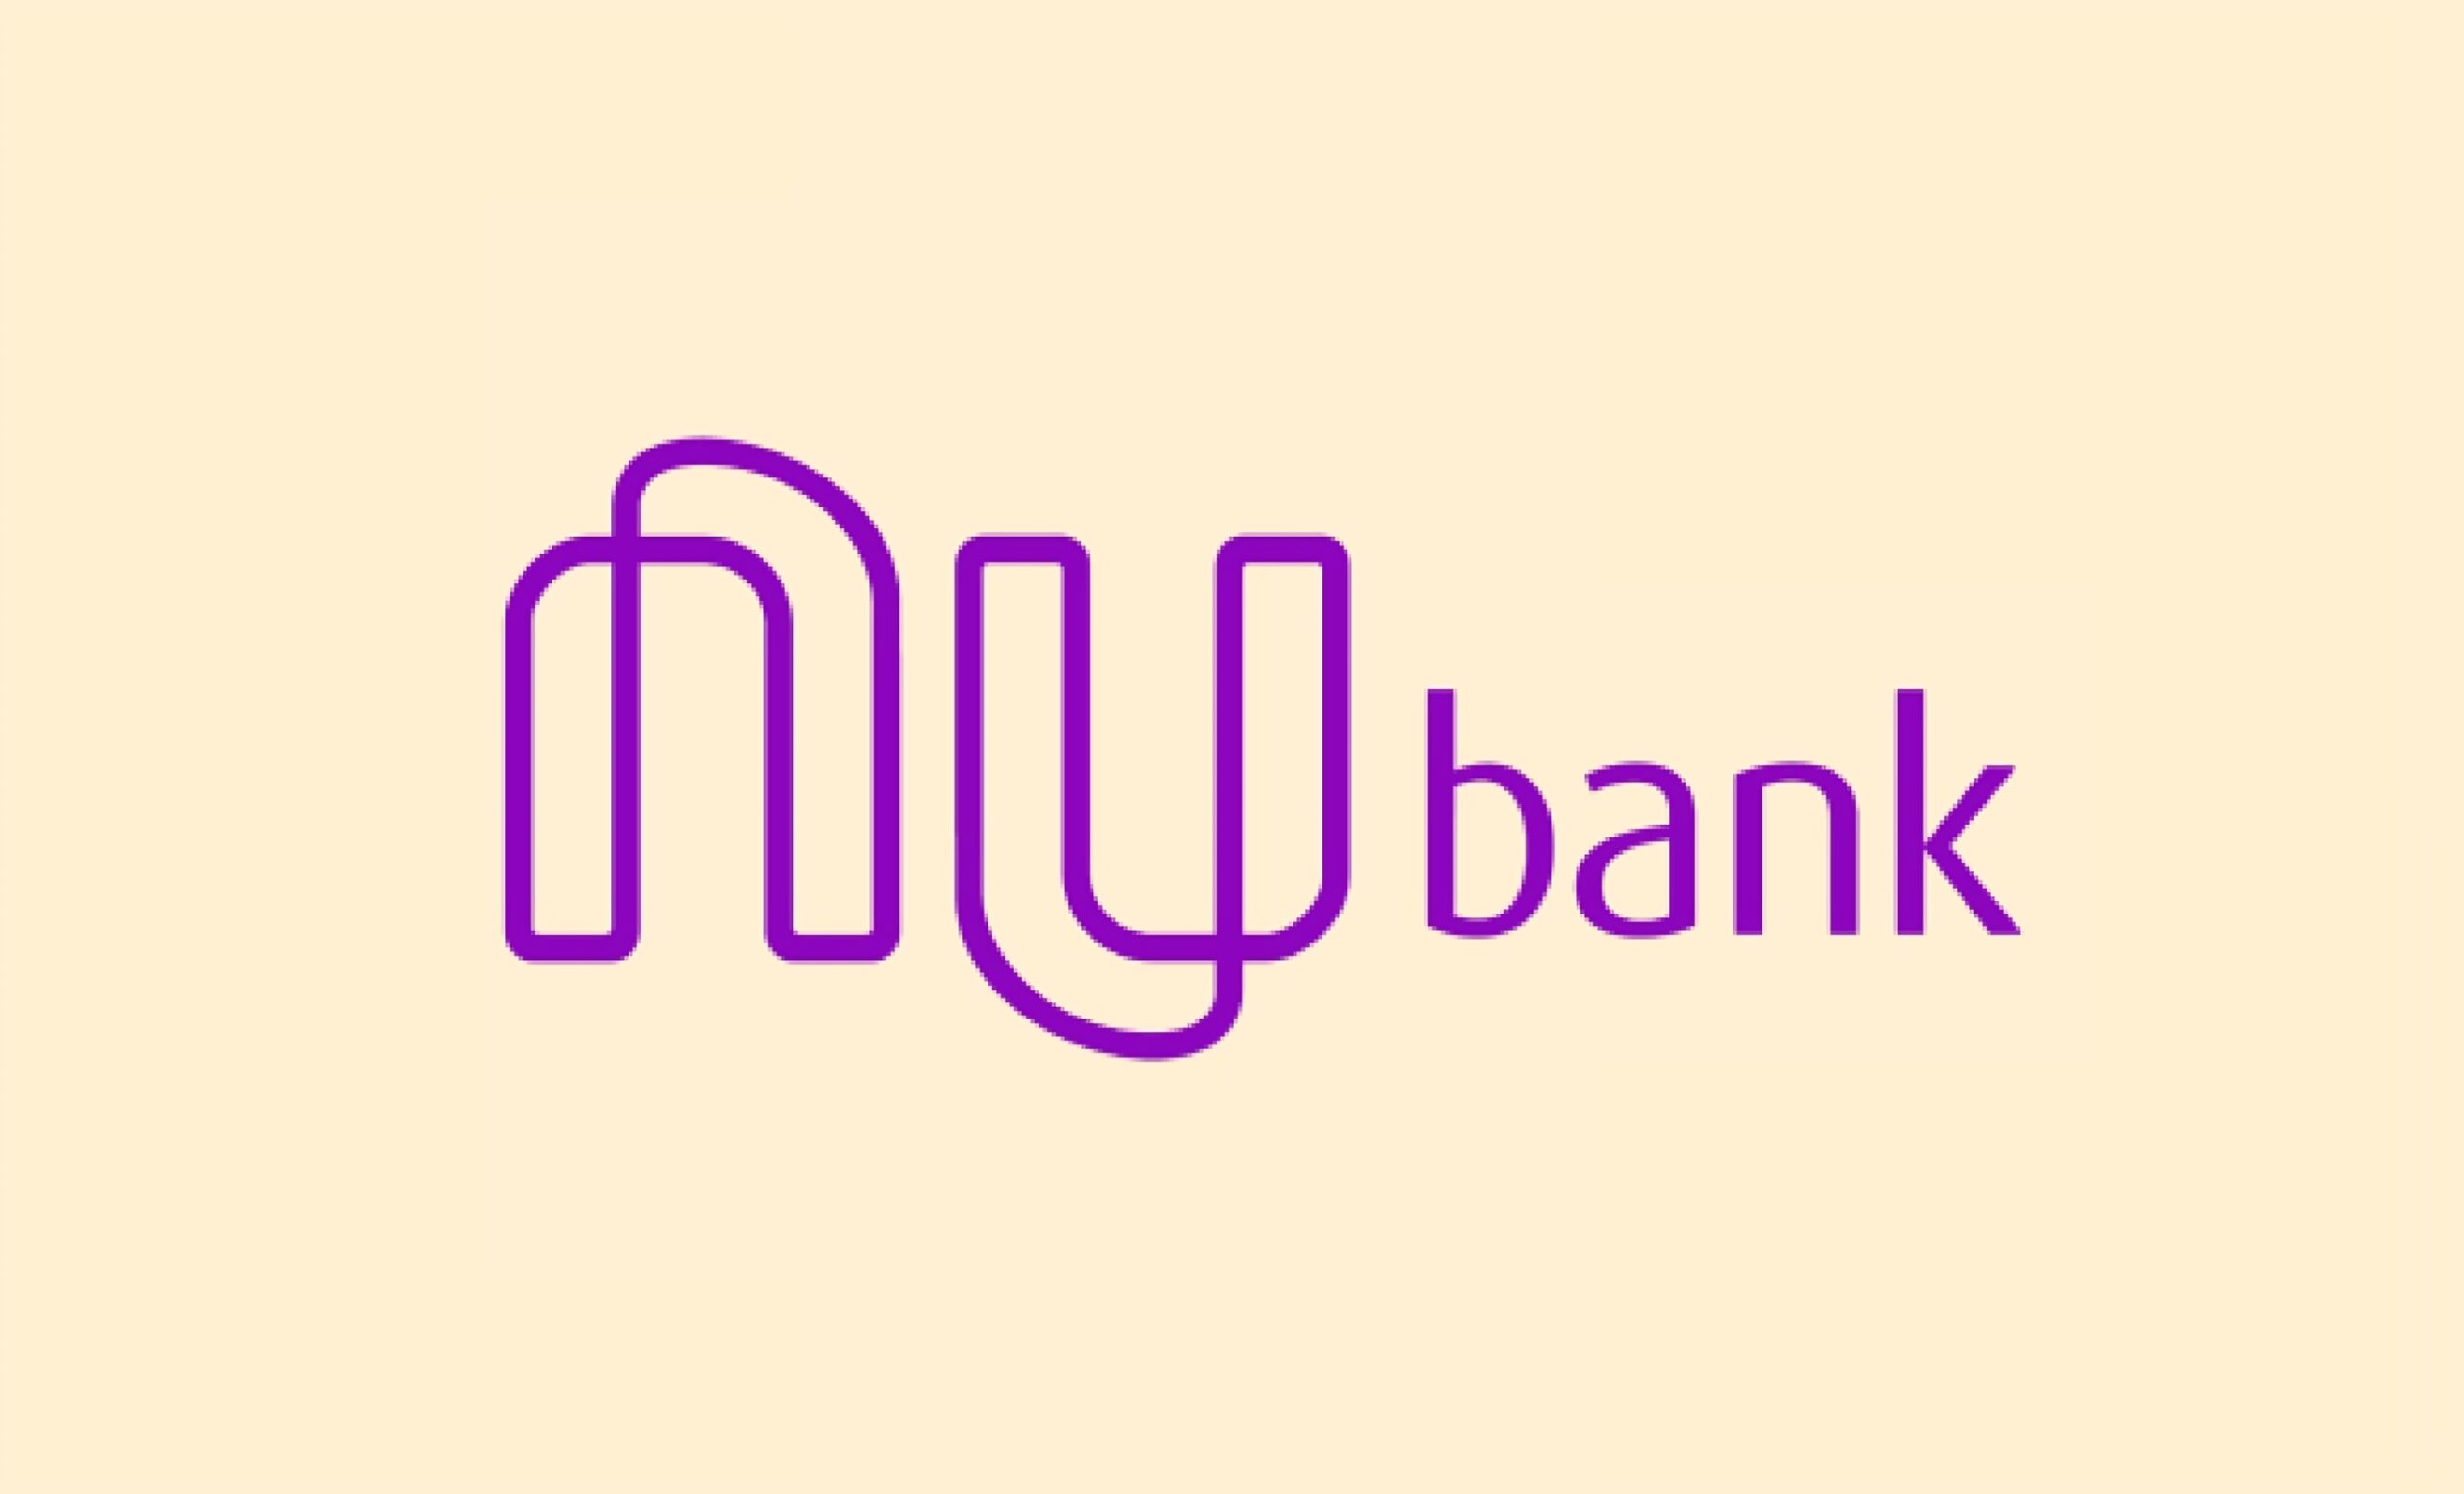 Nubank fintech company logo